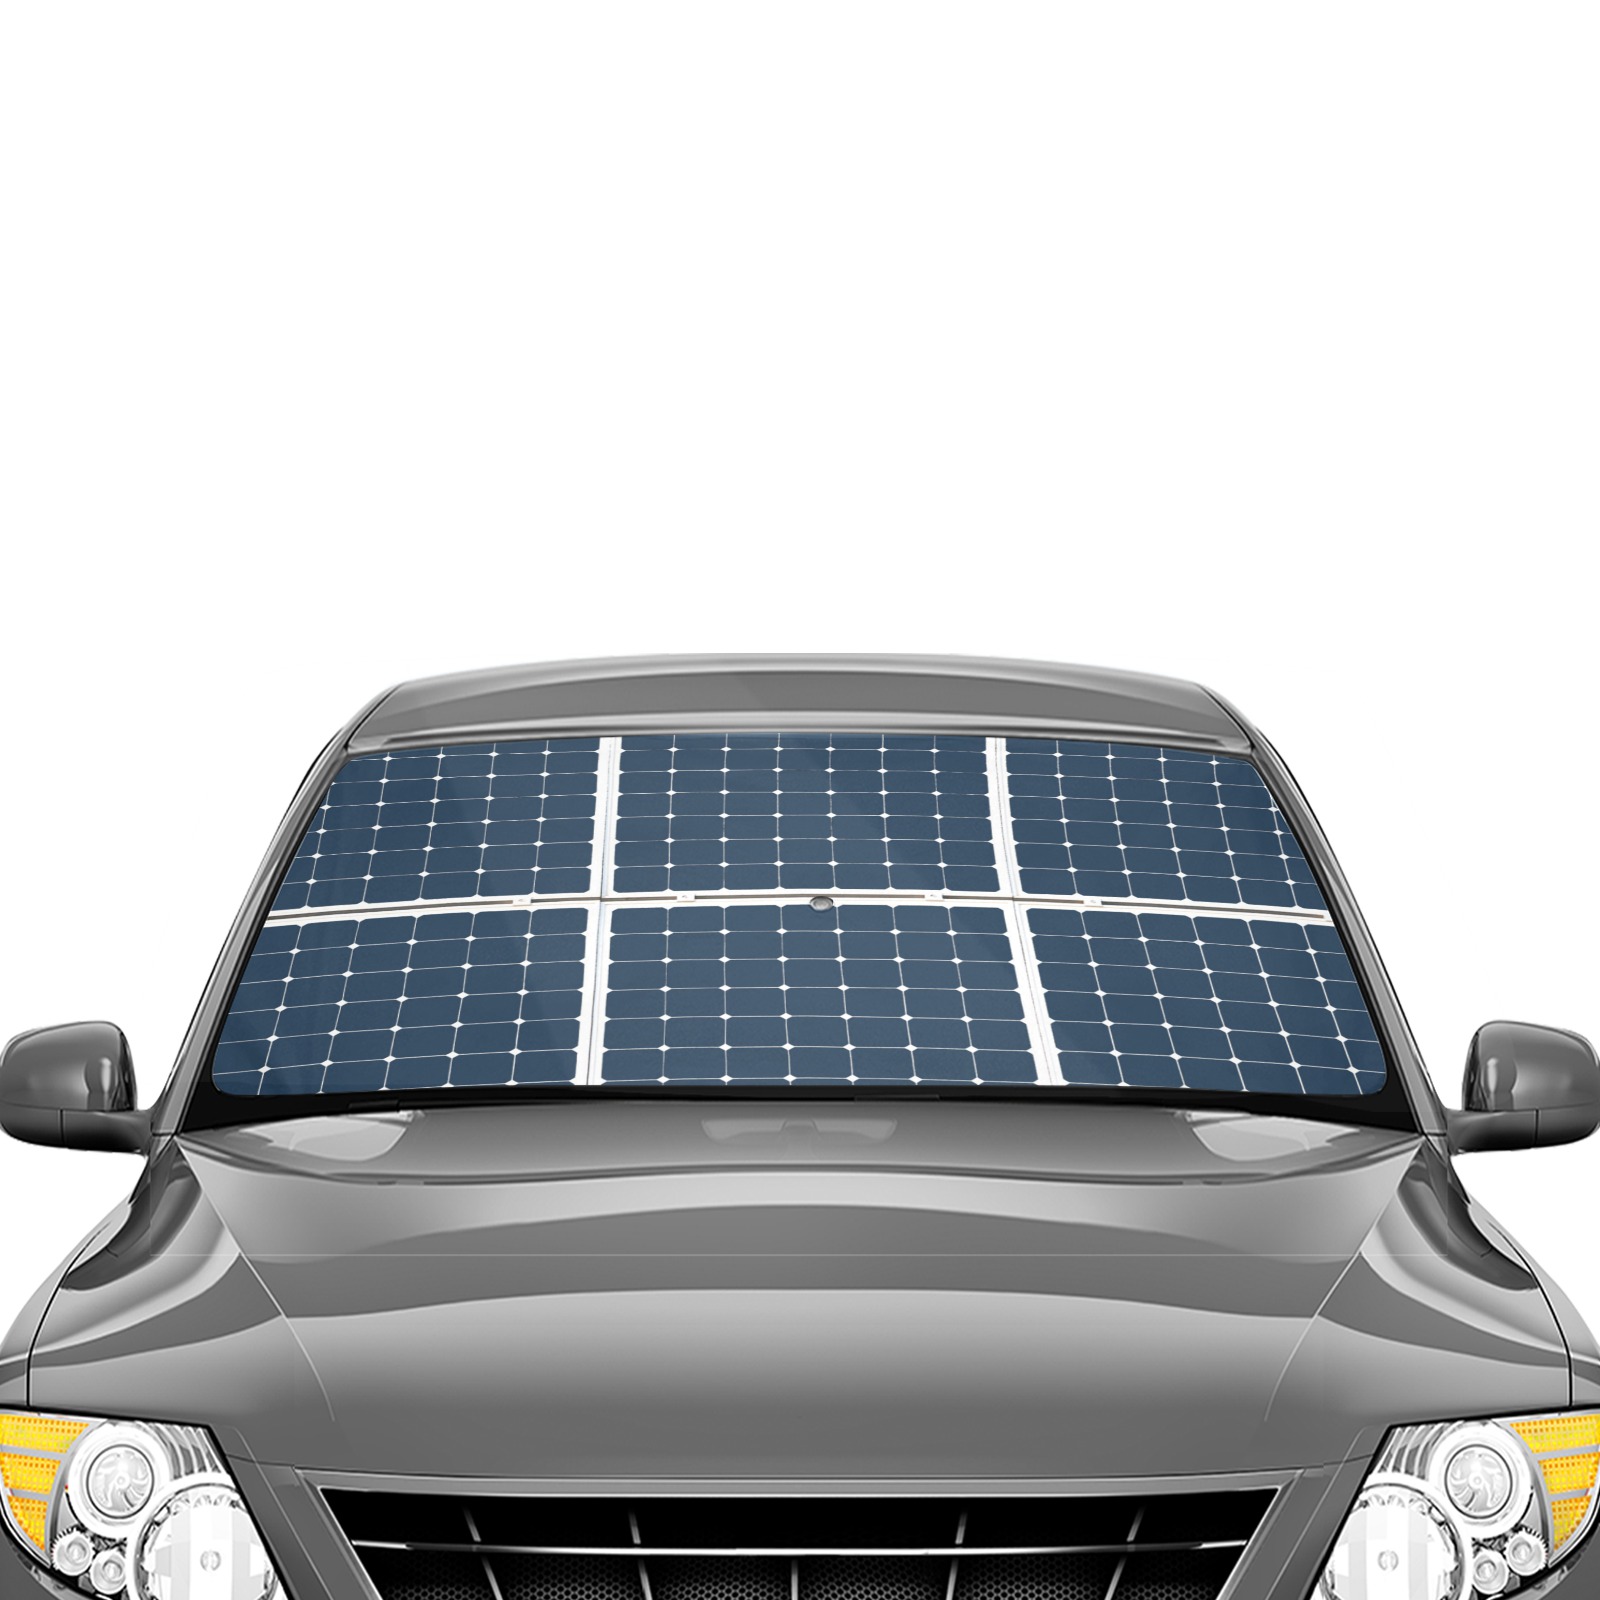 Solar Technology Power Panel Image Sun Energy Car Sun Shade Umbrella 58"x29"